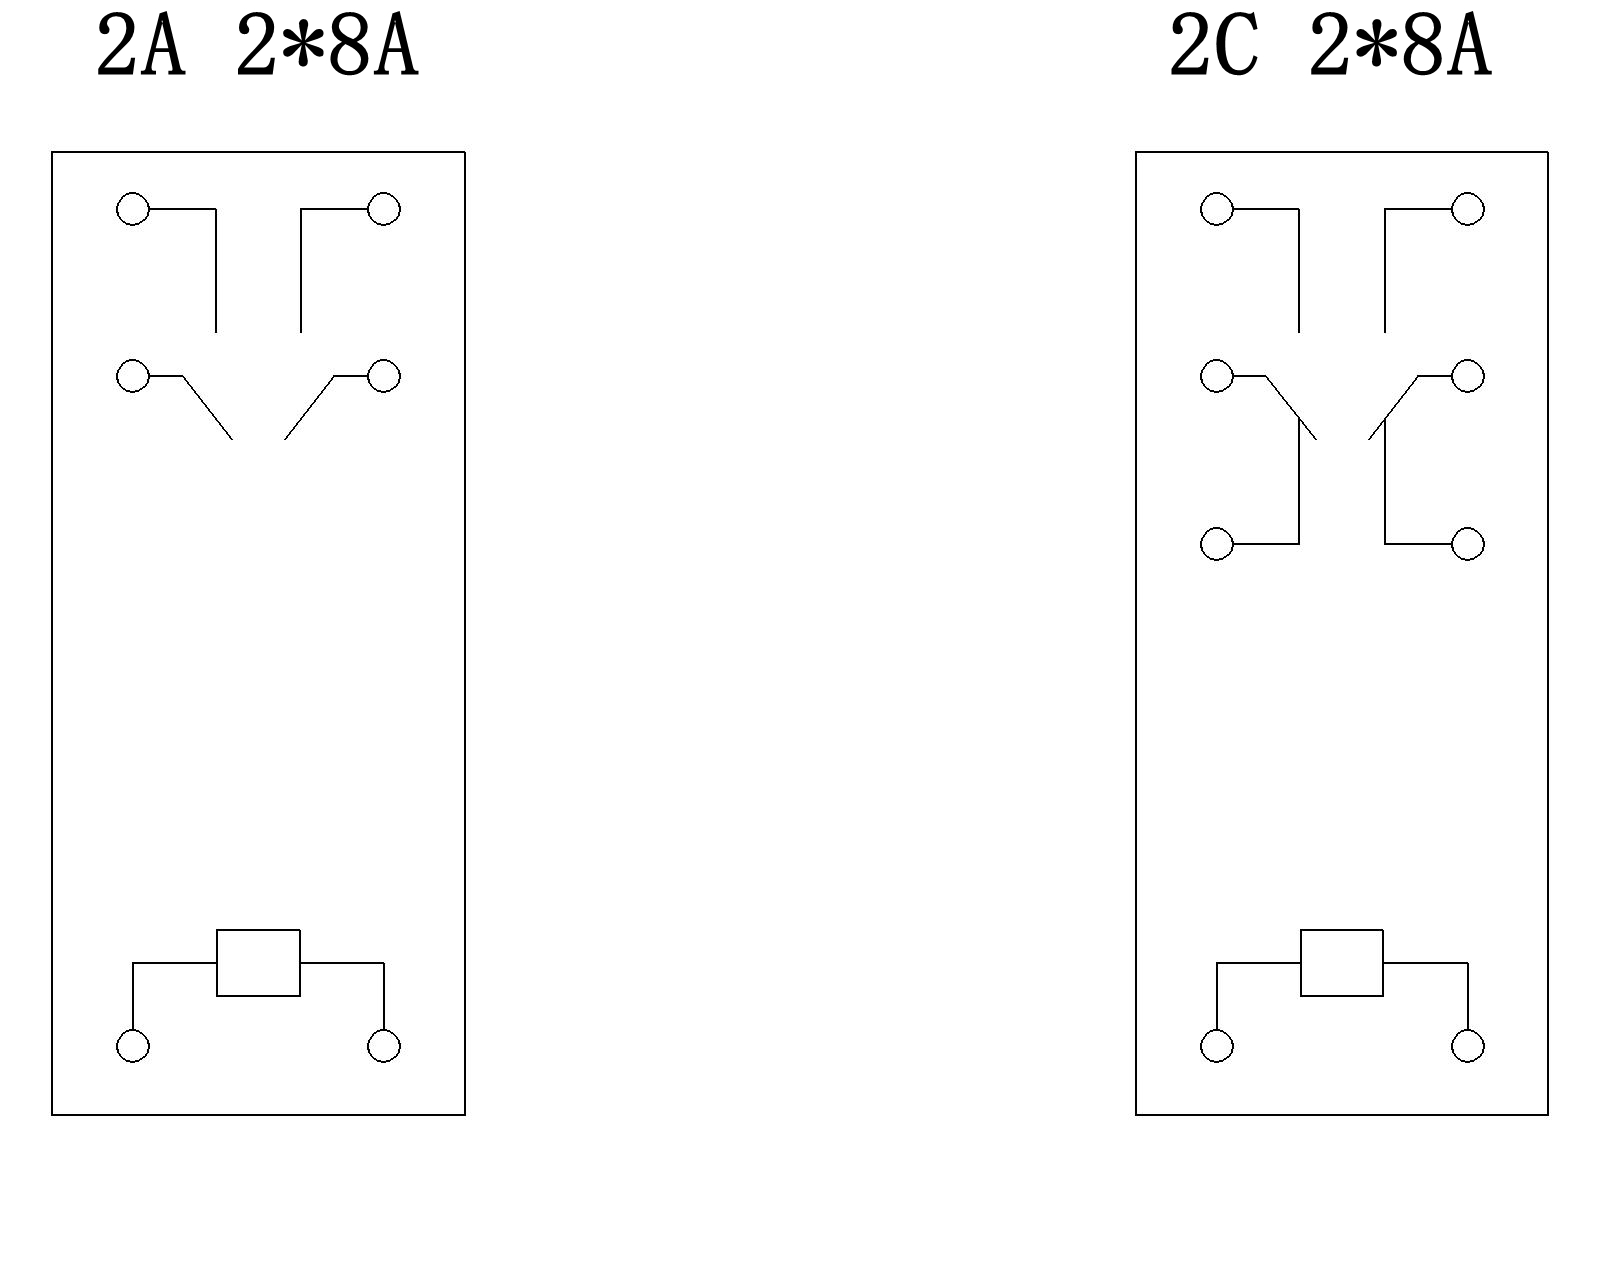 GN 2x8A wiring diagram